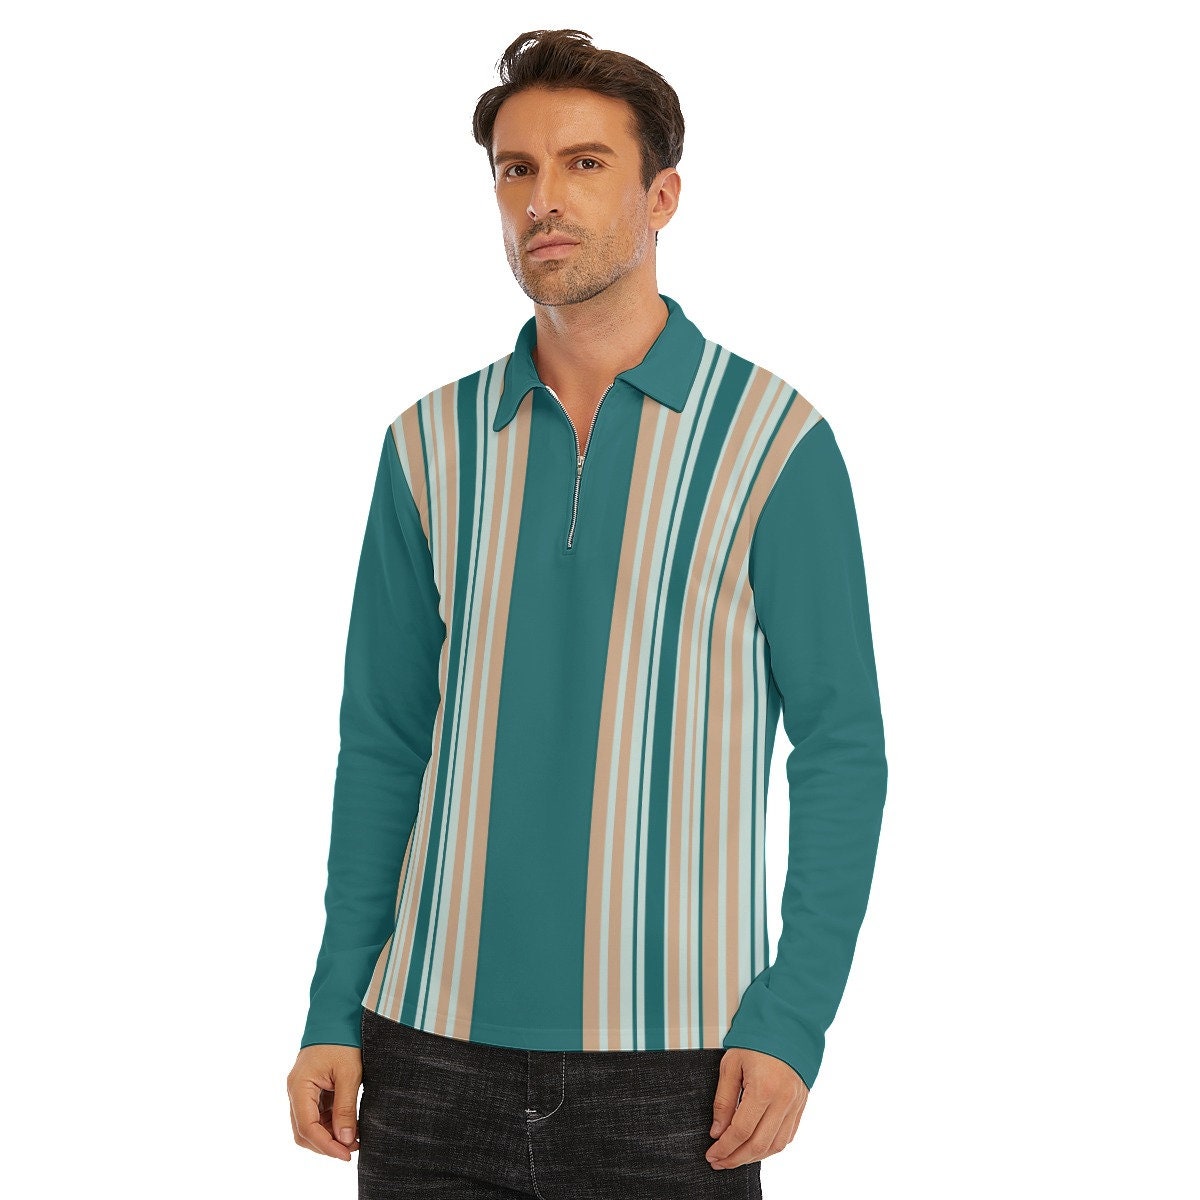 Retro Polo Shirt, Mint Green Polo Shirt, Stripe Polo Shirt Men, Vintage Style Shirt, Long Sleeve Polo Shirt, Polo Shirt Men,60s style polo